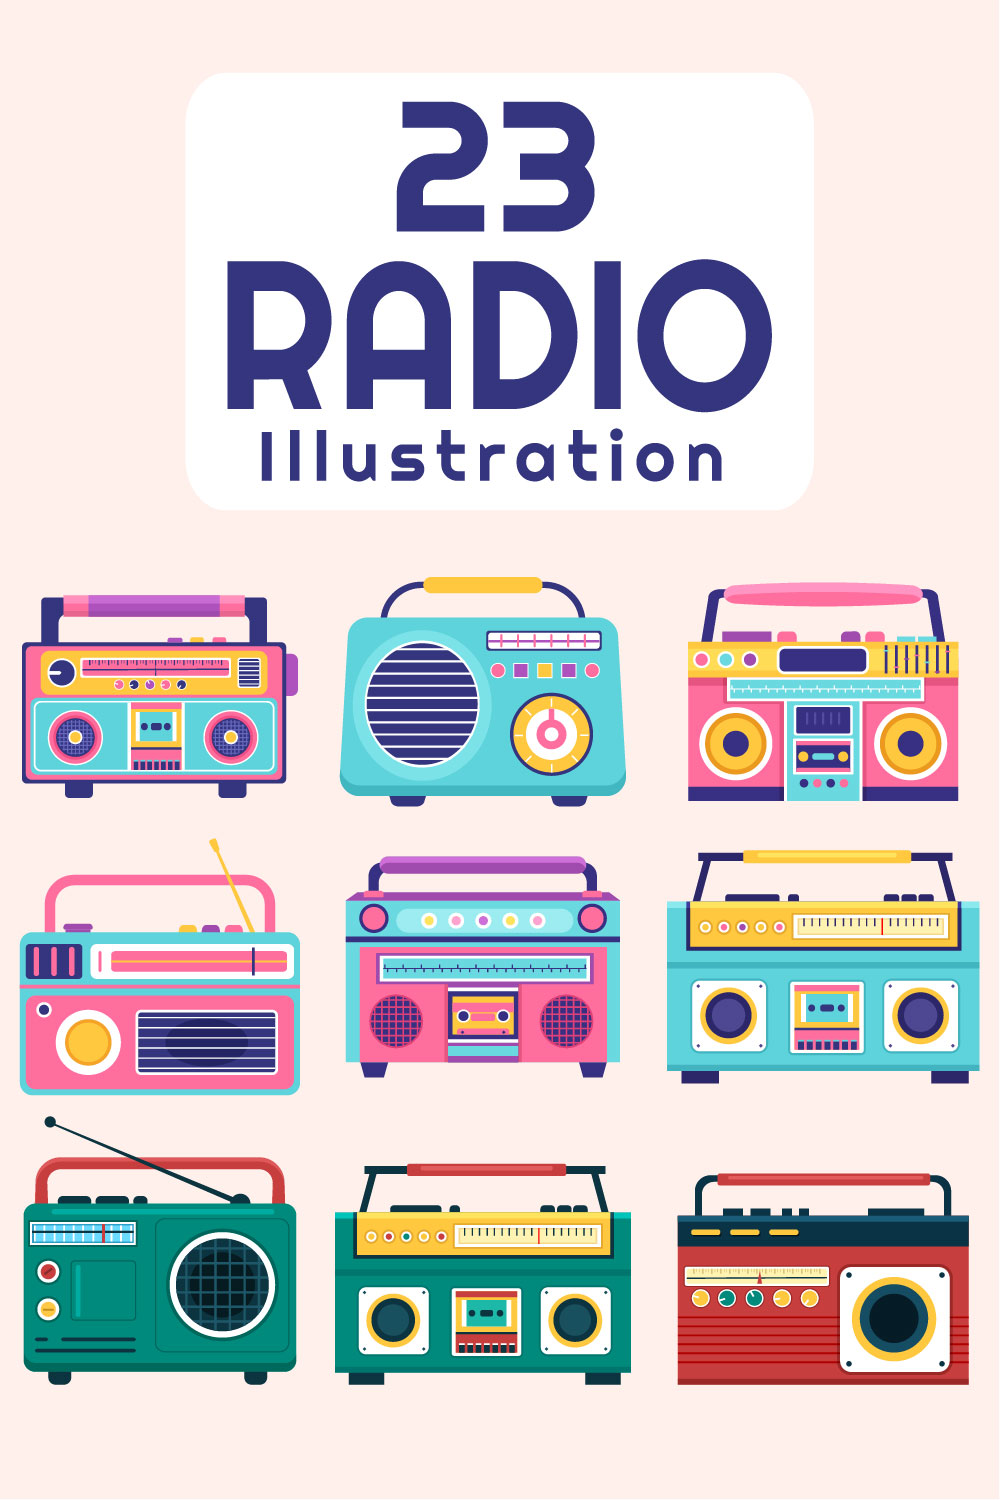 Radio Player Style Illustration pinterest image.